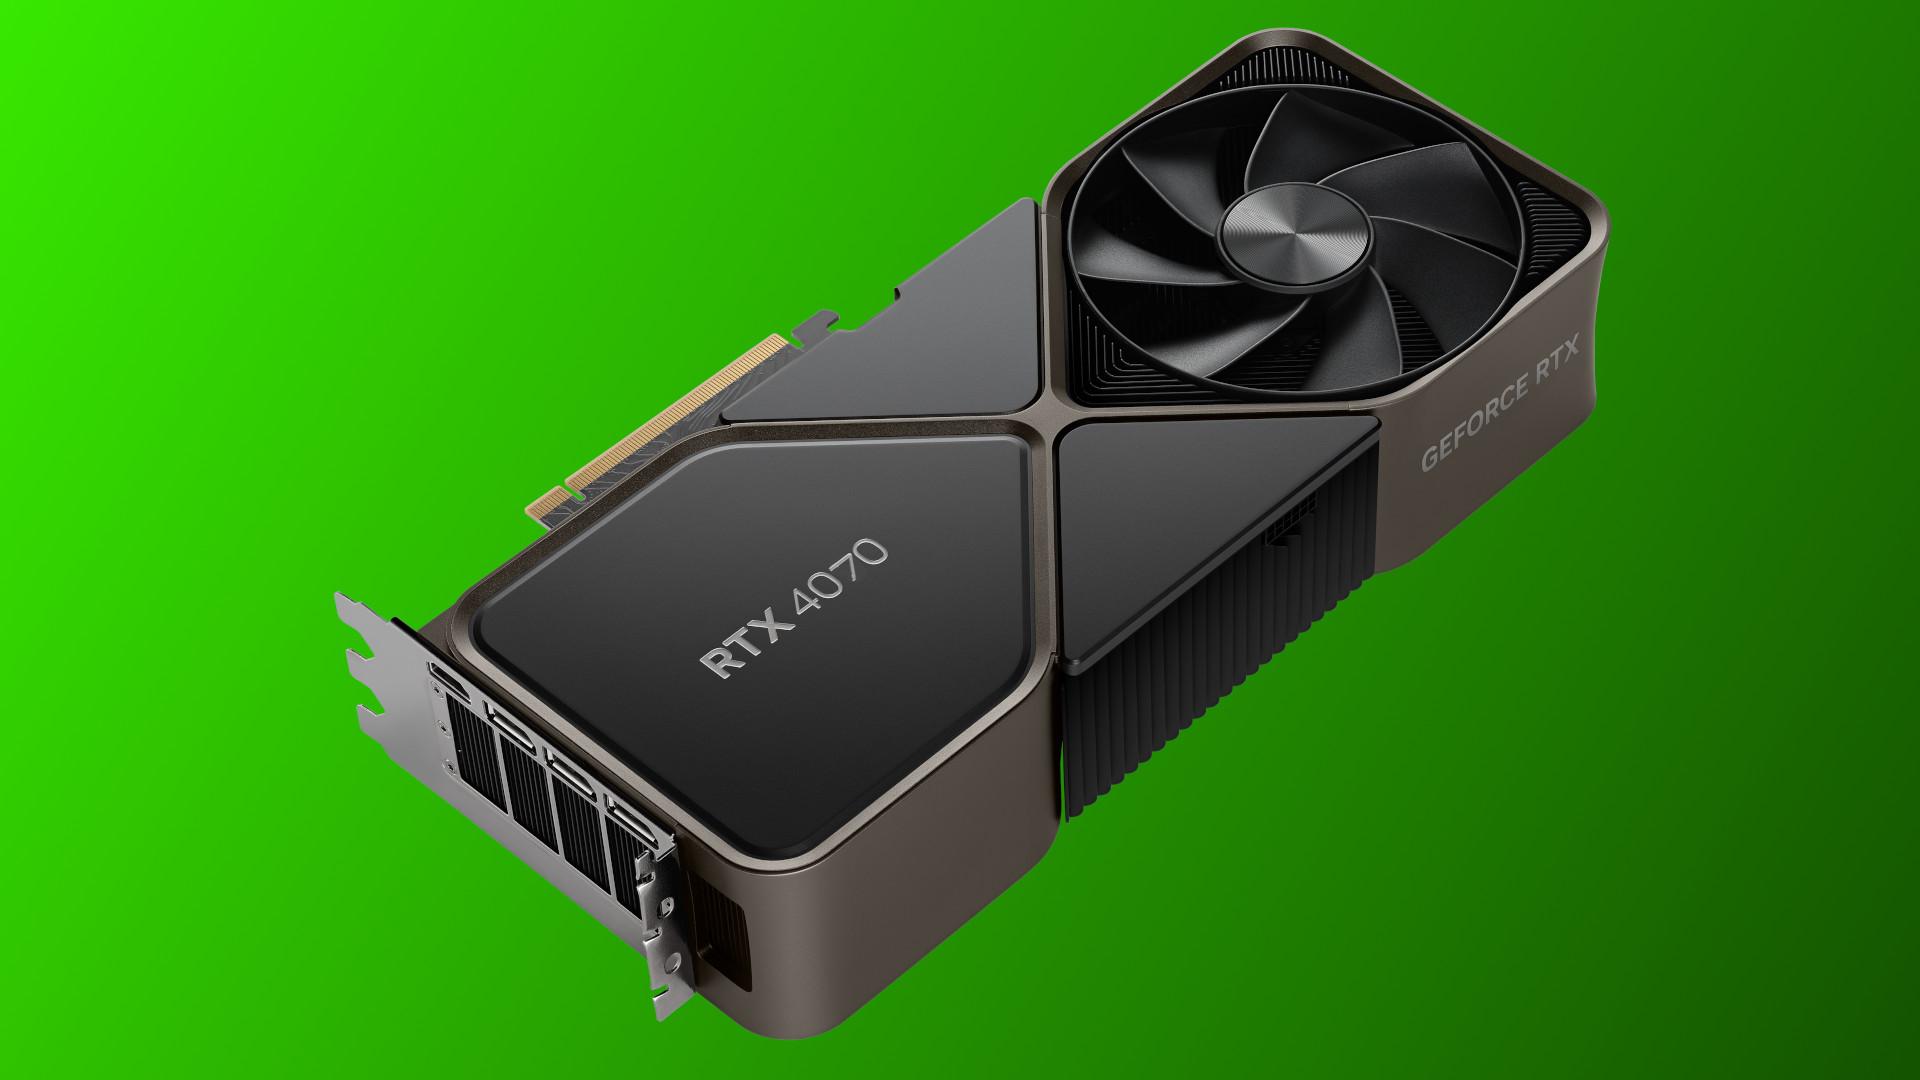 Nvidia RTX 4070 image provides first look at mid-range GeForce GPU